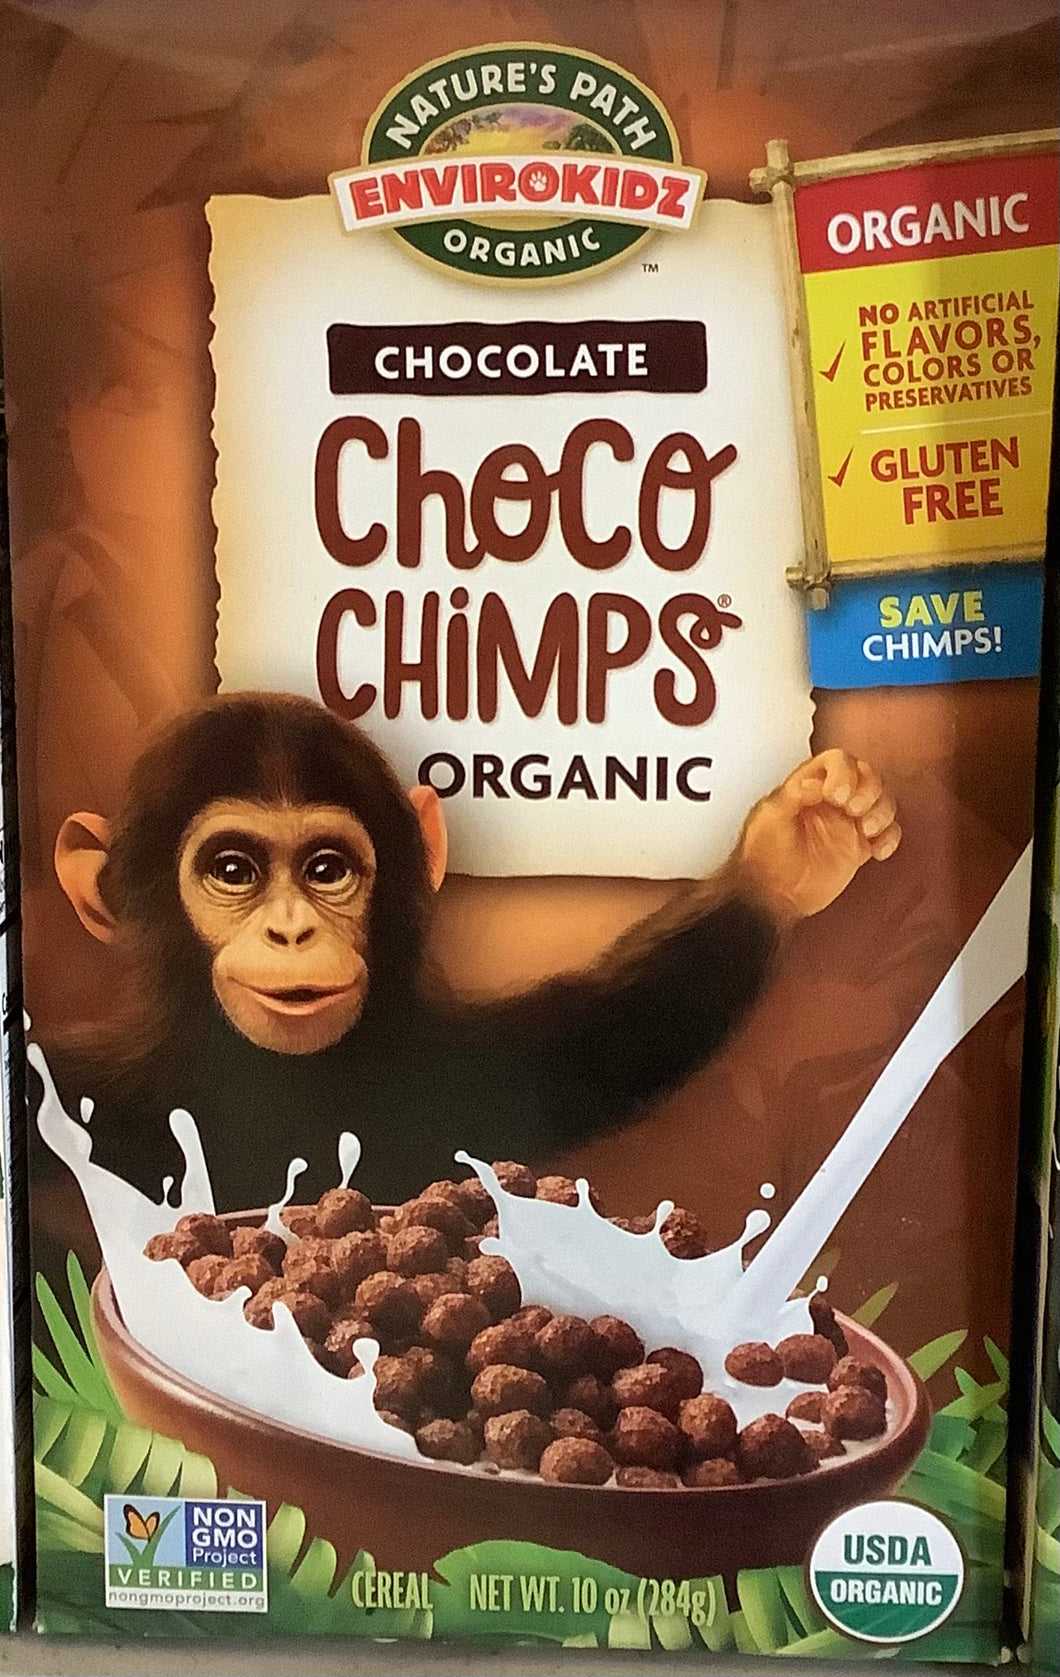 Cereal, Choco Chimps, Nature's Path, Environkidz, Organic, Gluten Free